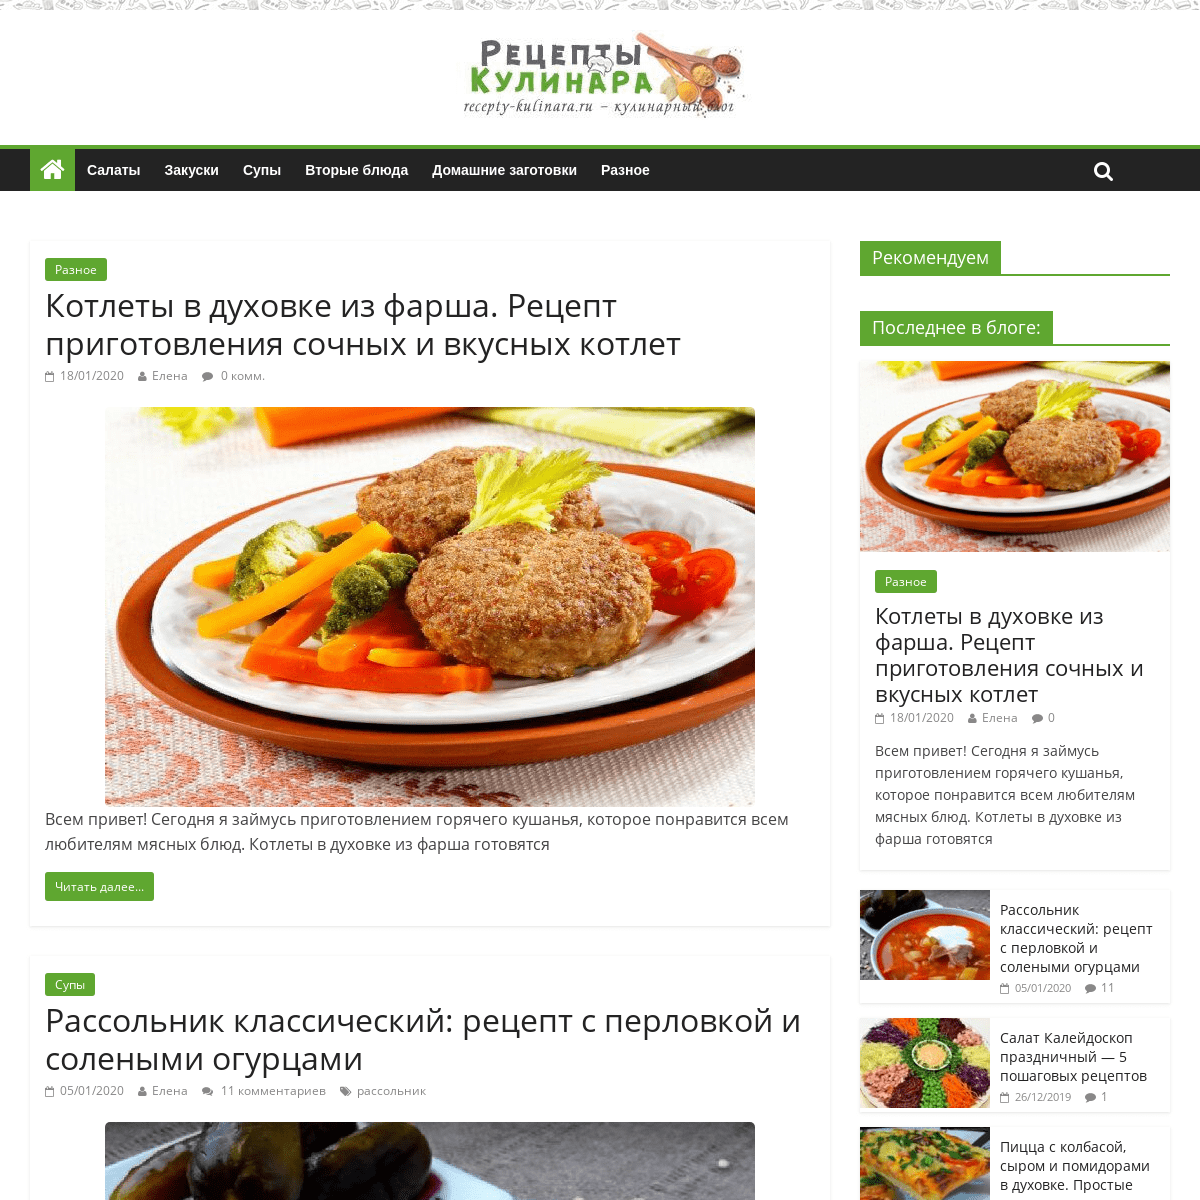 A complete backup of recepty-kulinara.ru